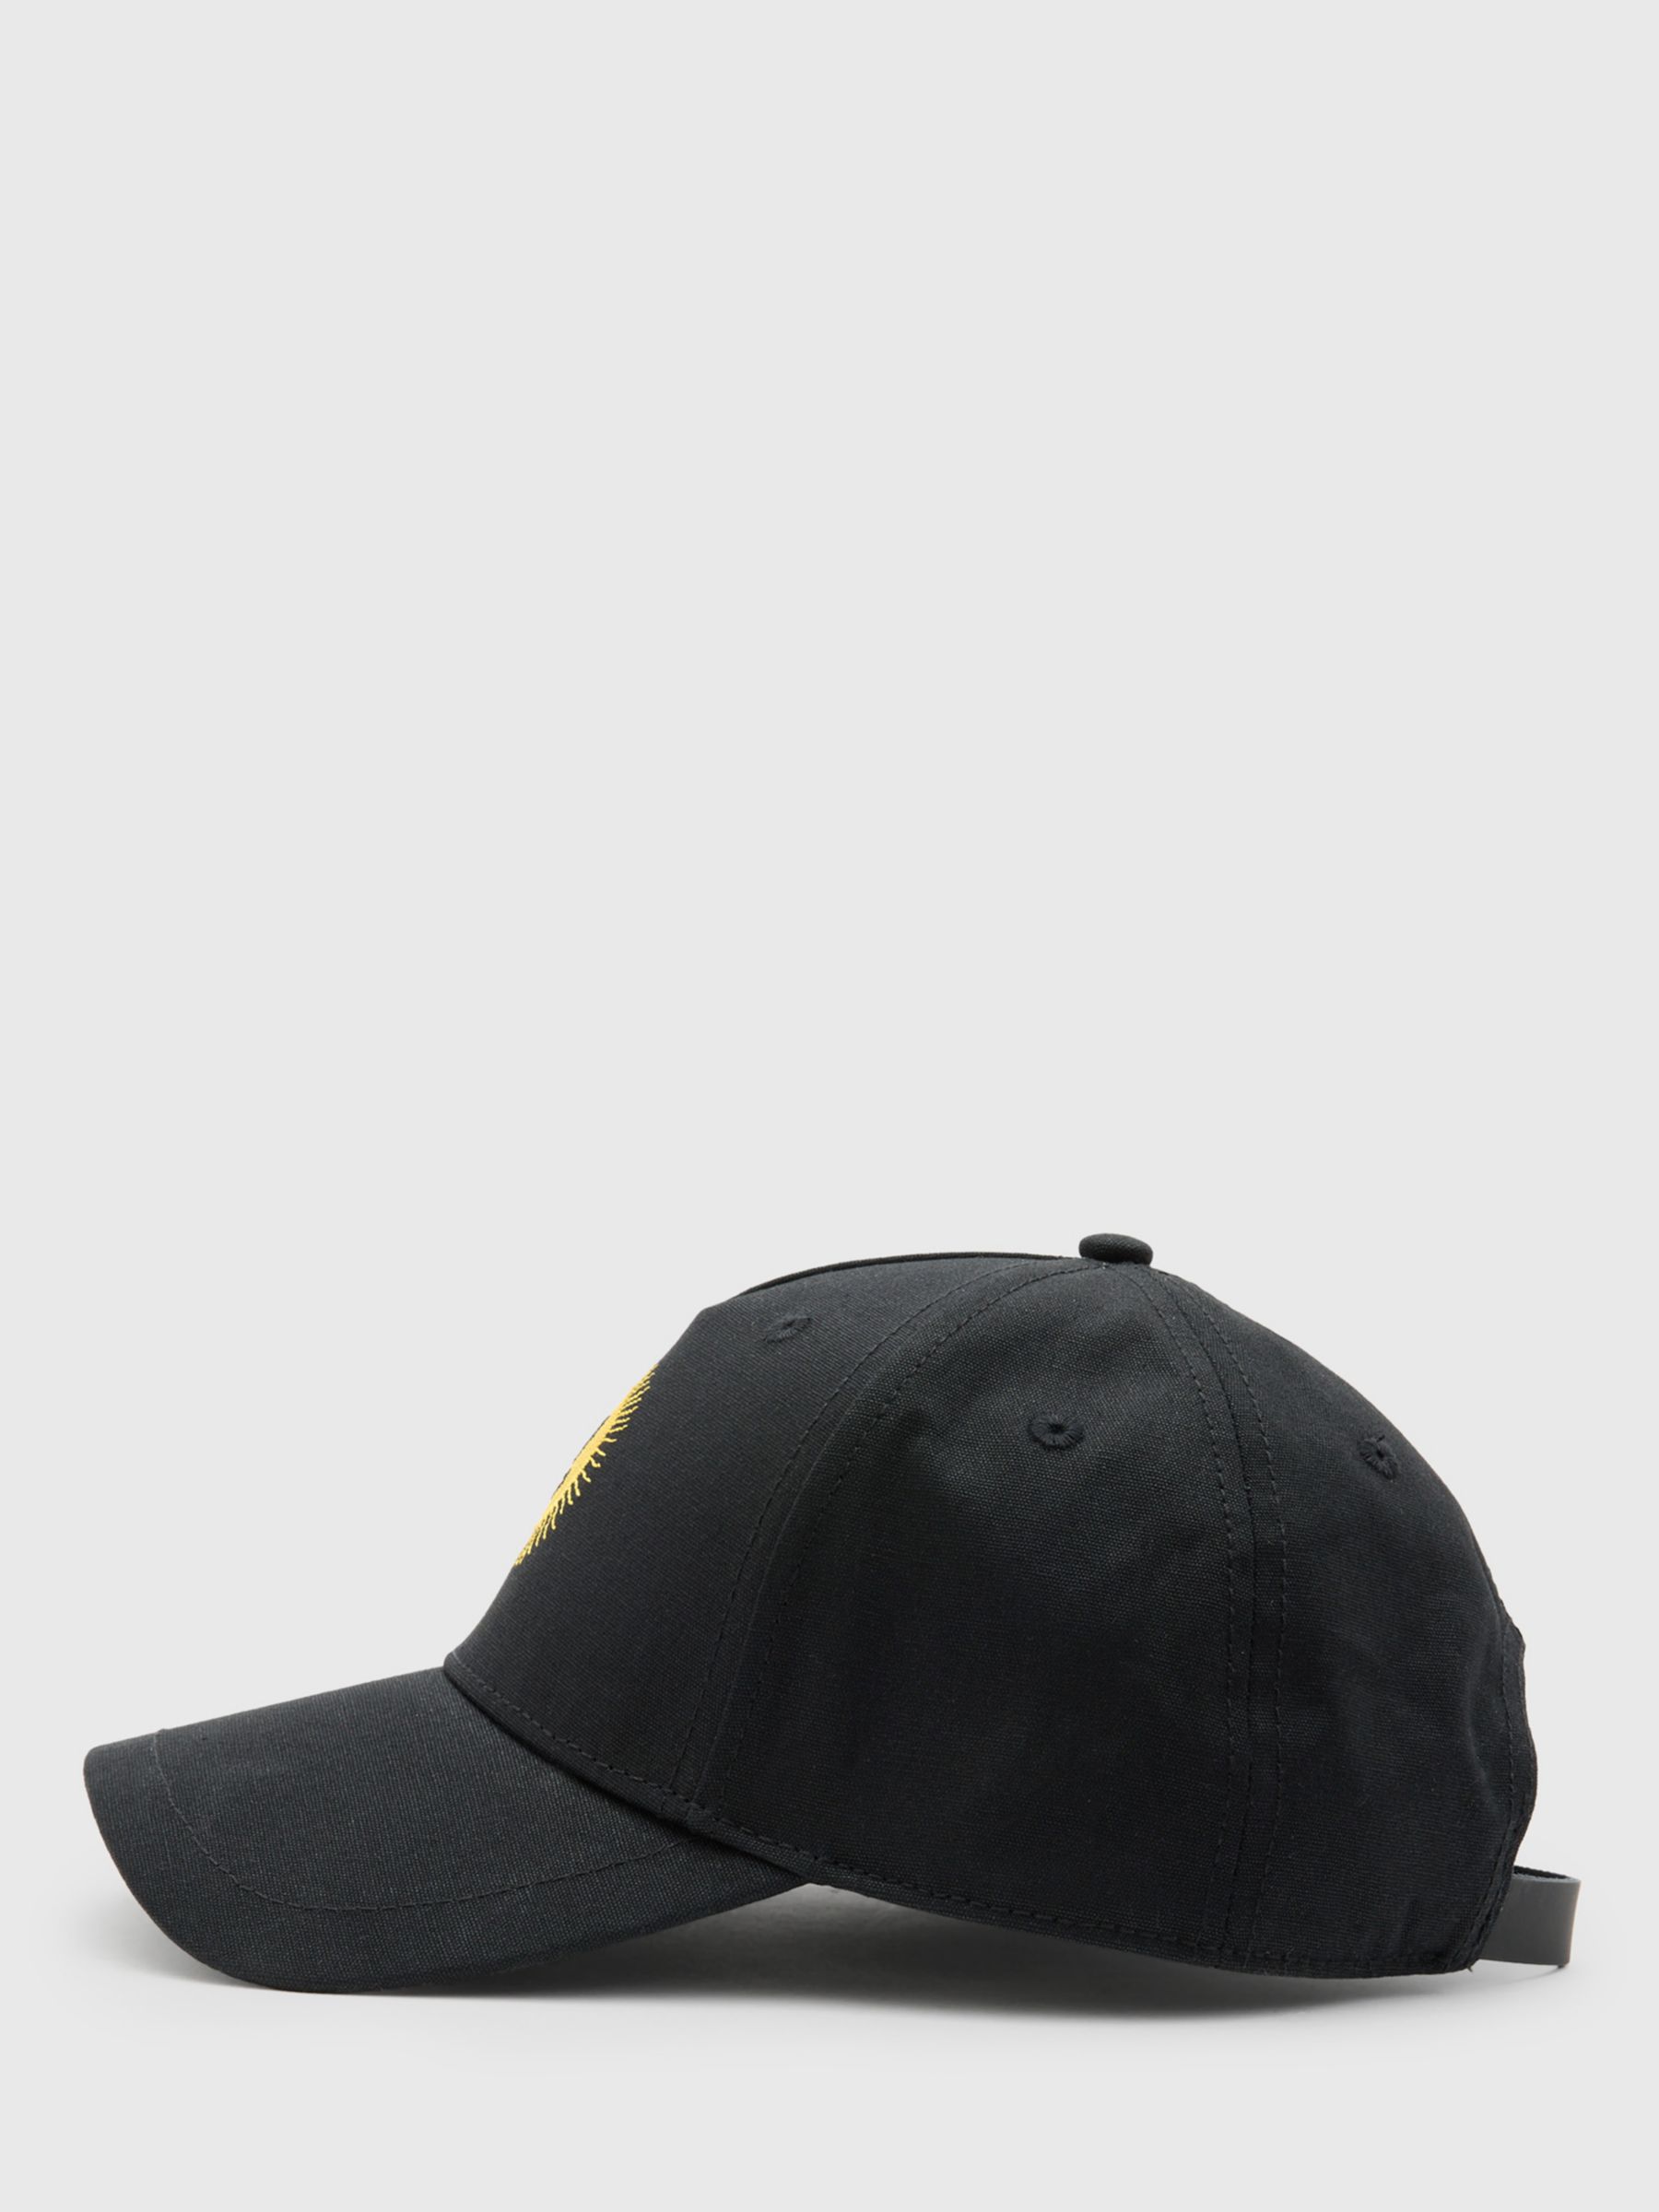 AllSaints Sun Smirk Baseball Cap, Black, One Size